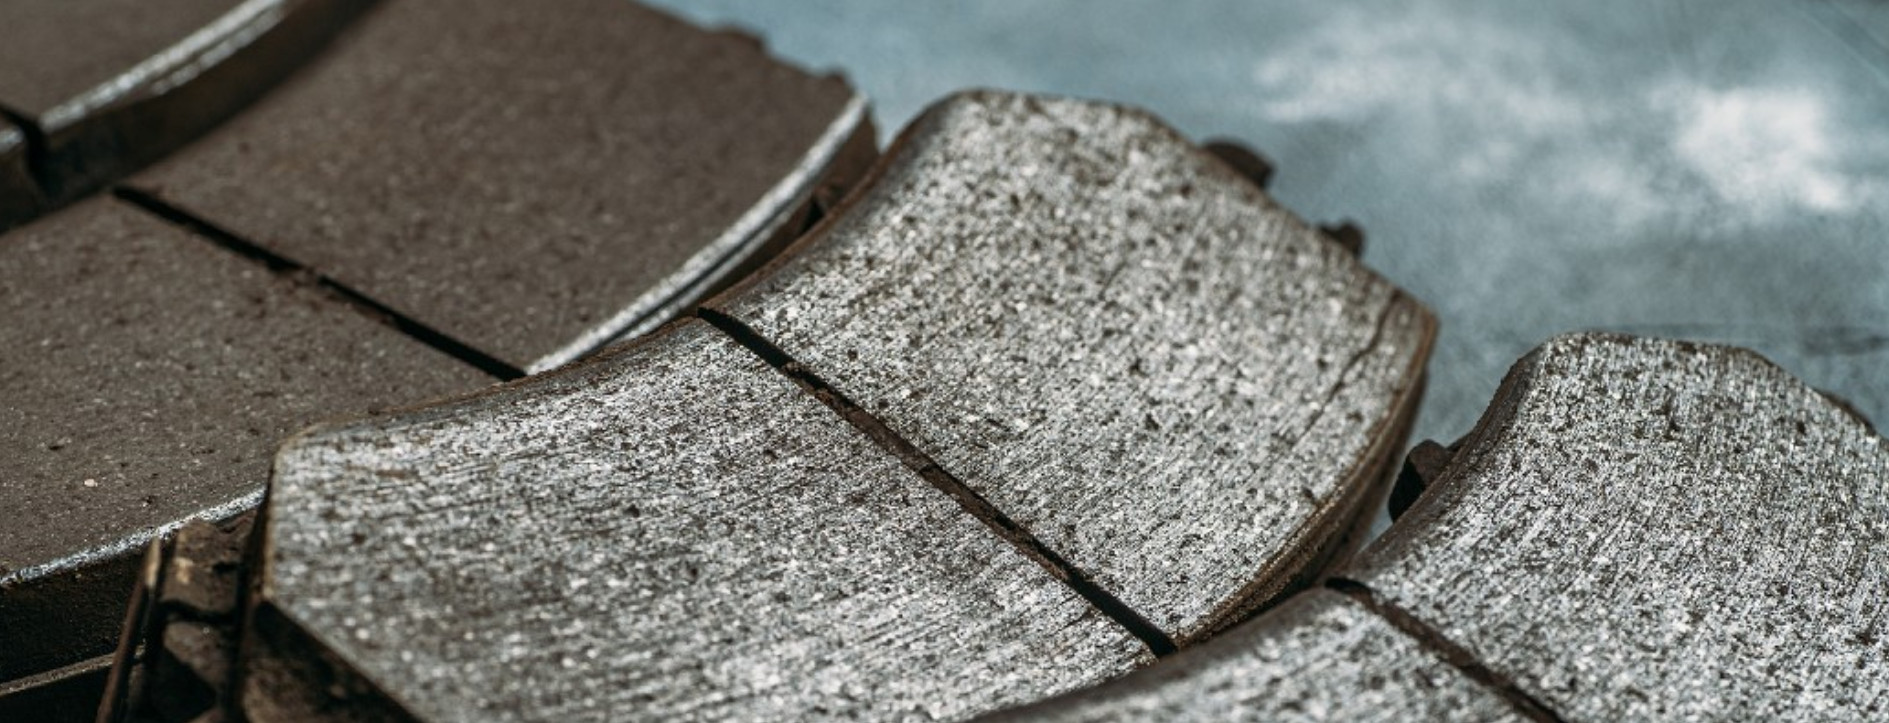 Semi-metallica fregit pads (8).